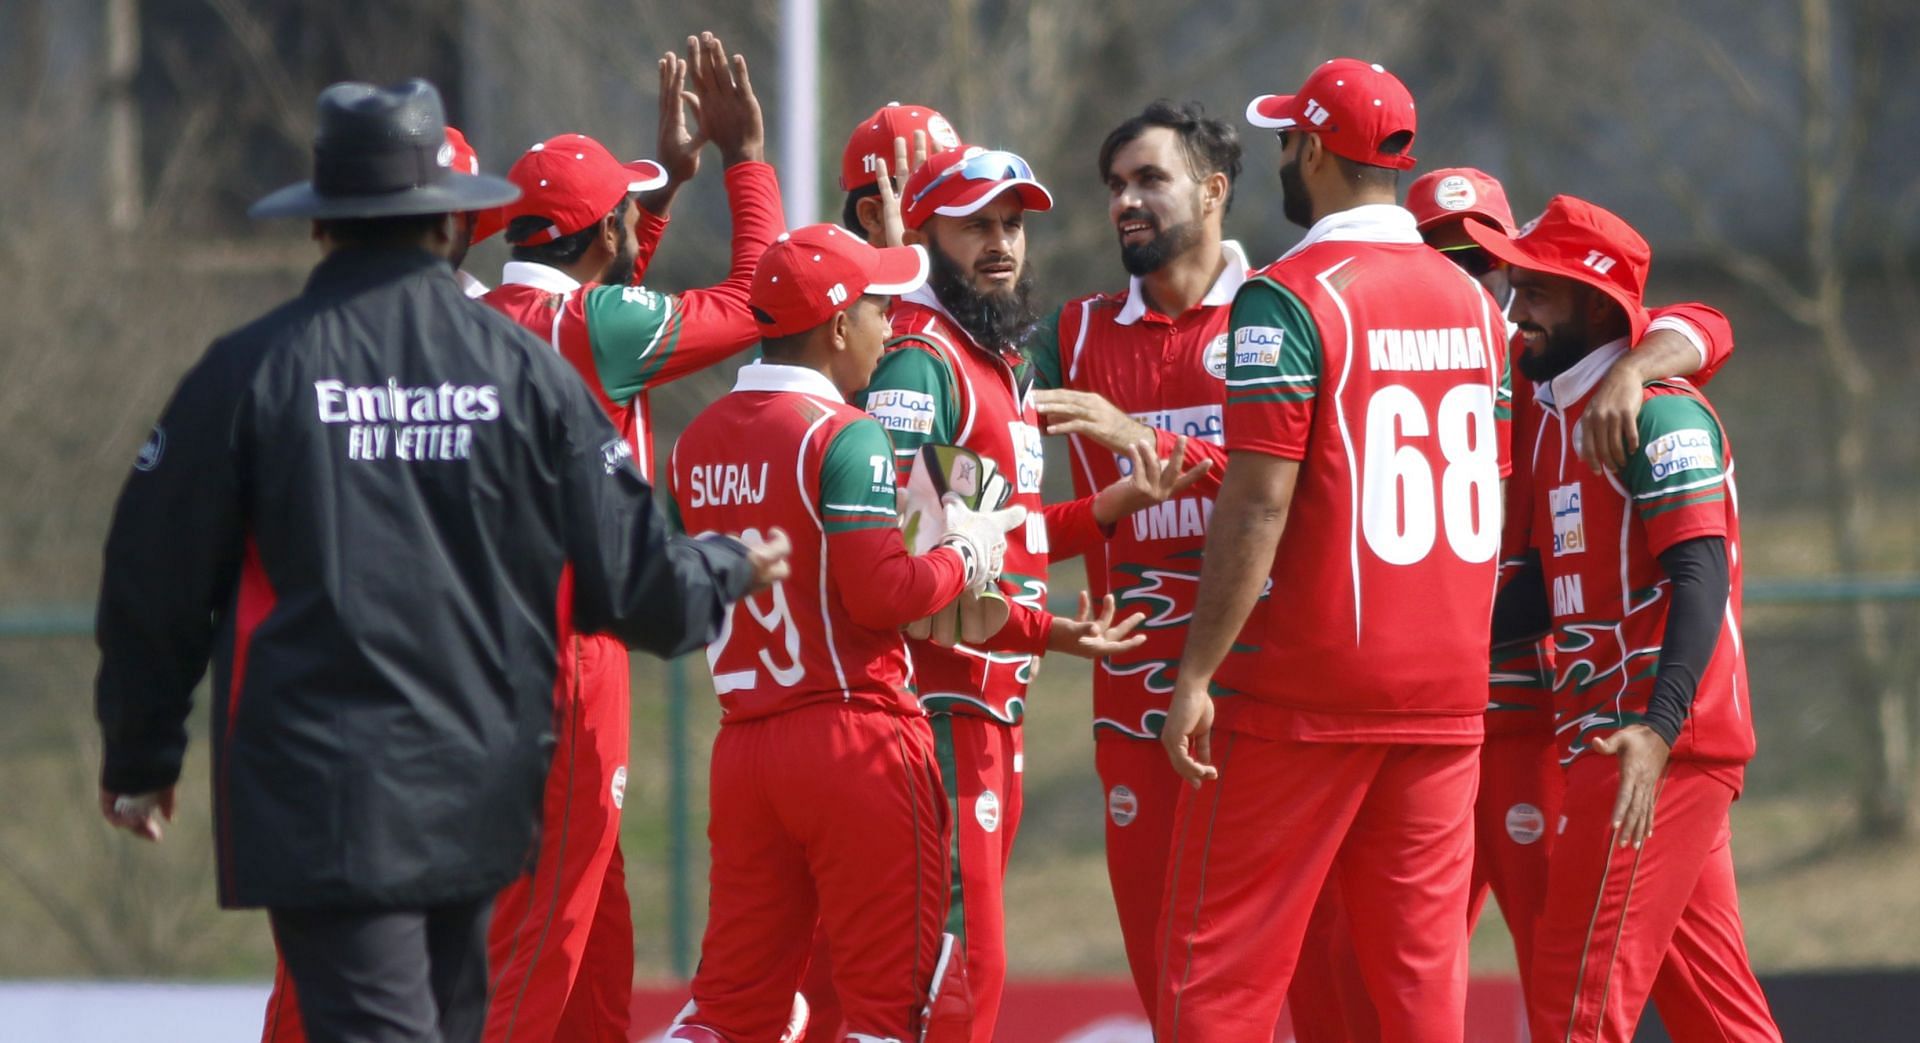 Oman Cricket Team in action - Image Courtesy: ICC